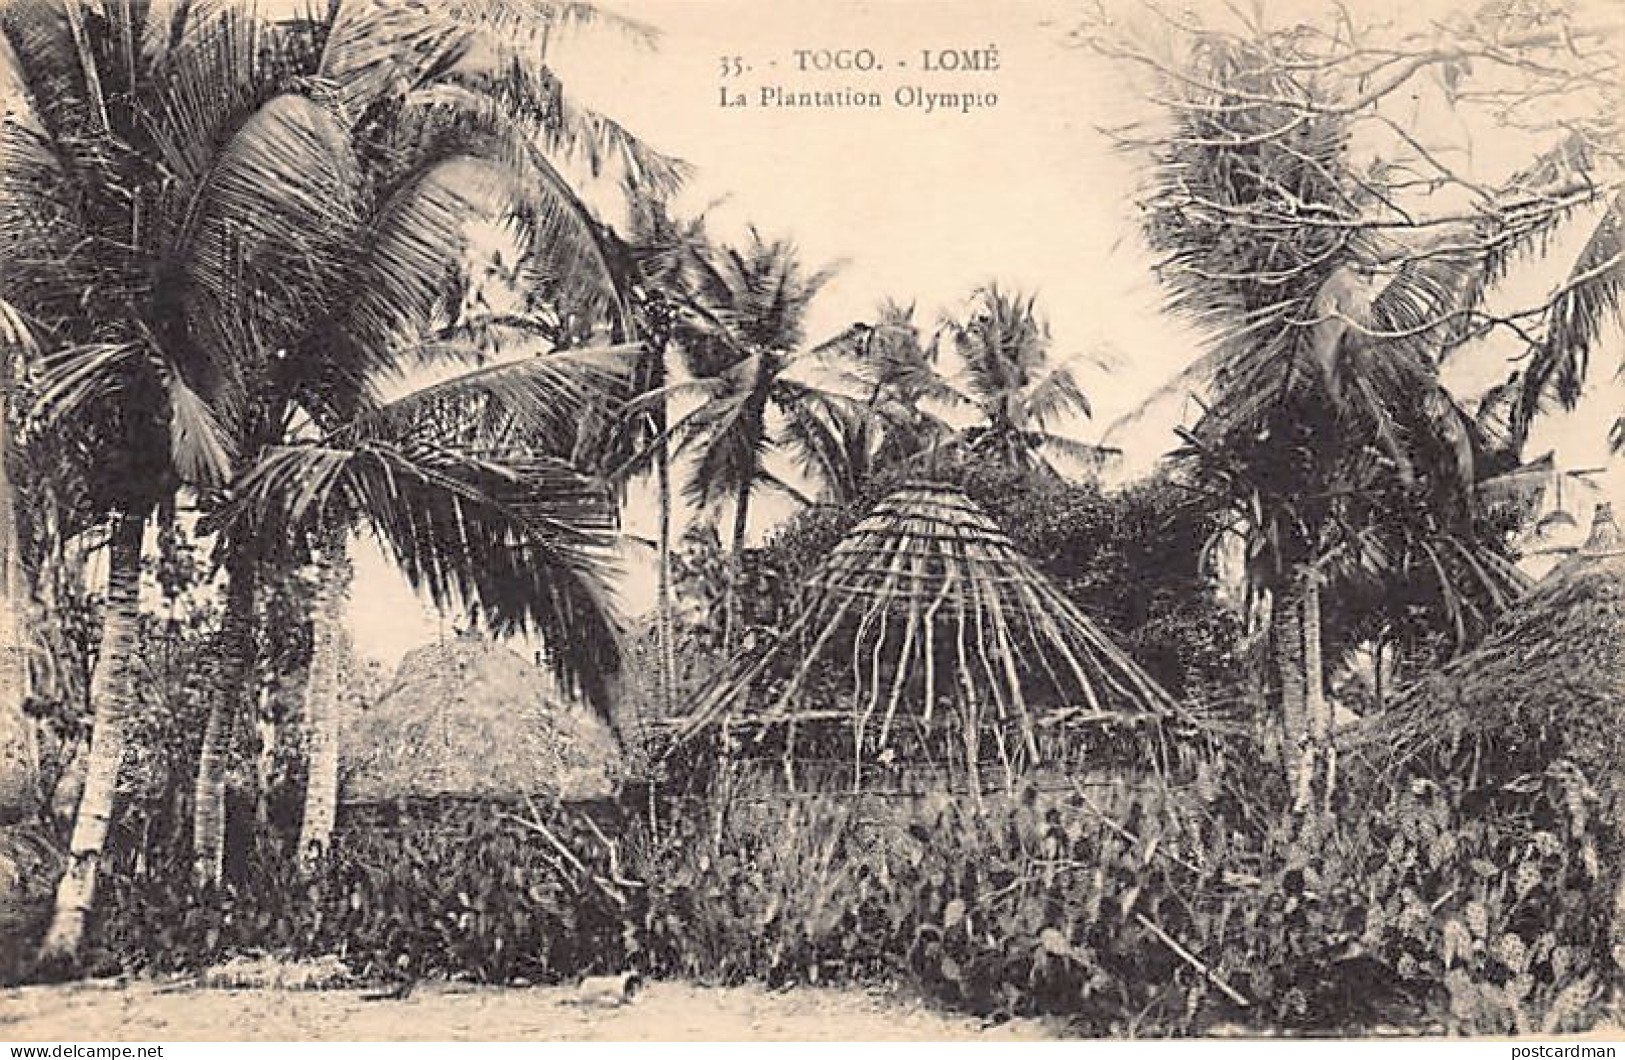 Togo - LOMÉ - La Plantation Olympio - Ed. A.-A. Acolatsé 35 - Togo